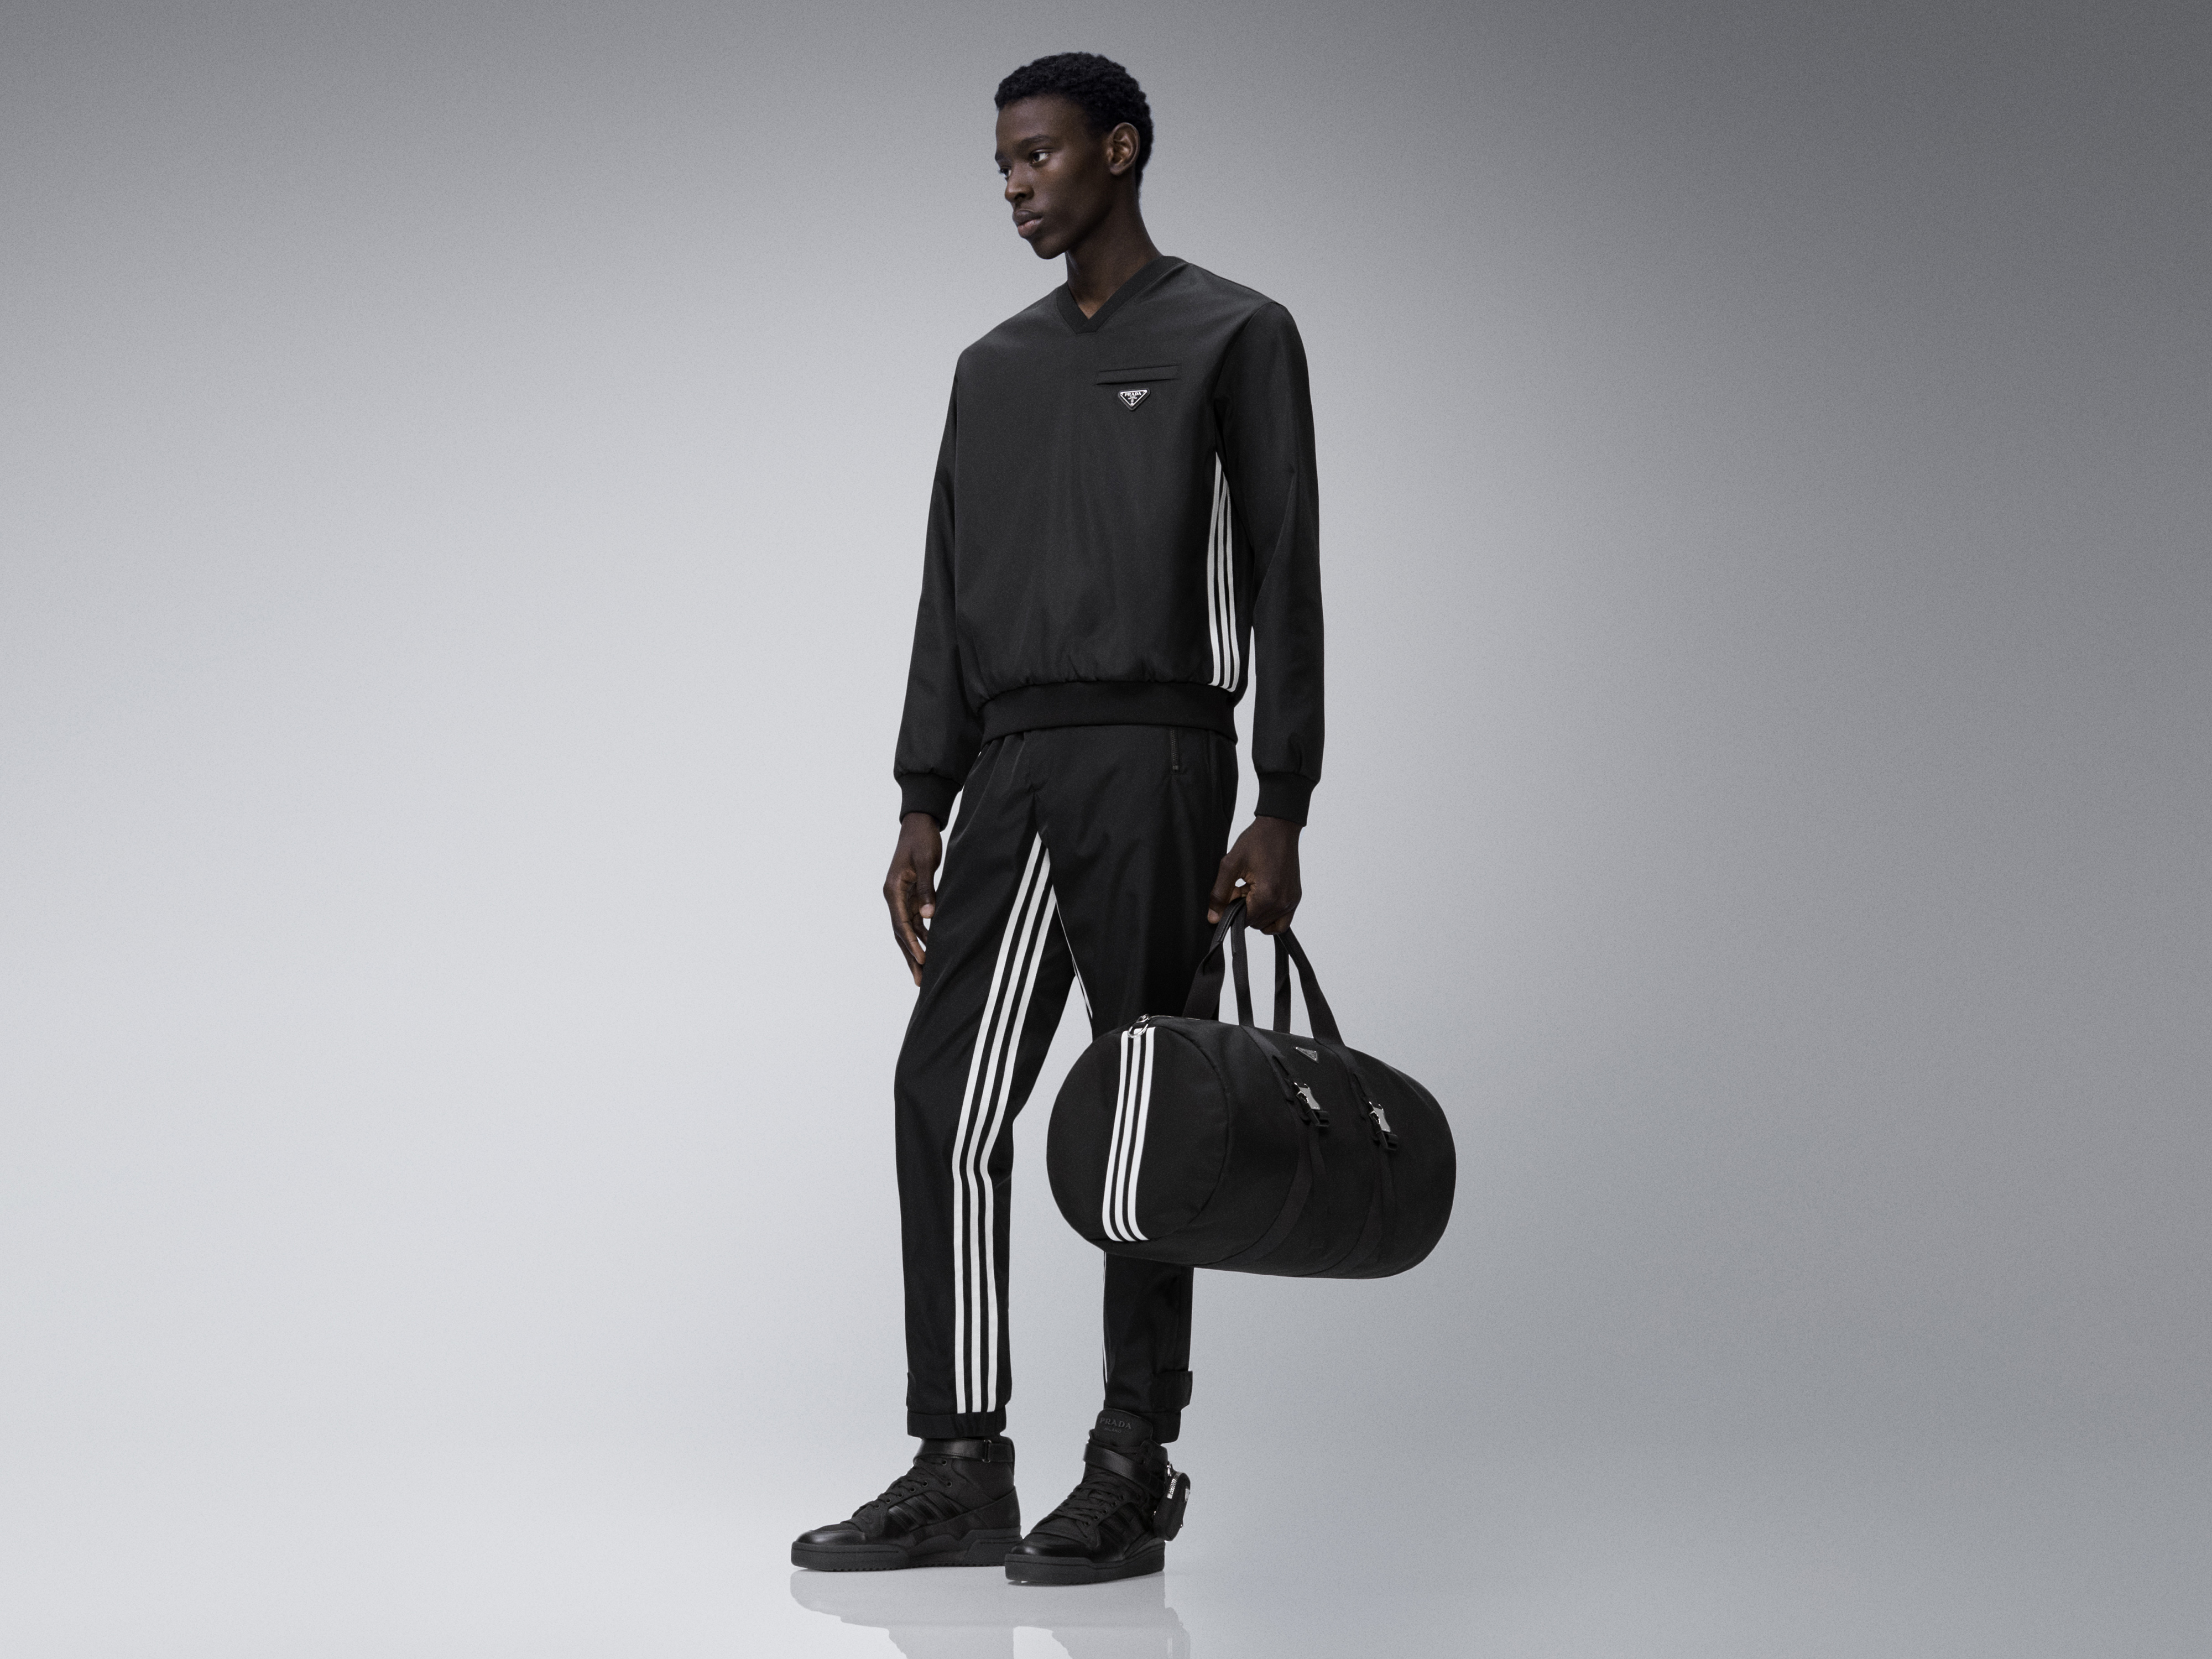 Balenciaga x Yeezy Gap, Pradidas and Dior gym bags: What's in Fashion